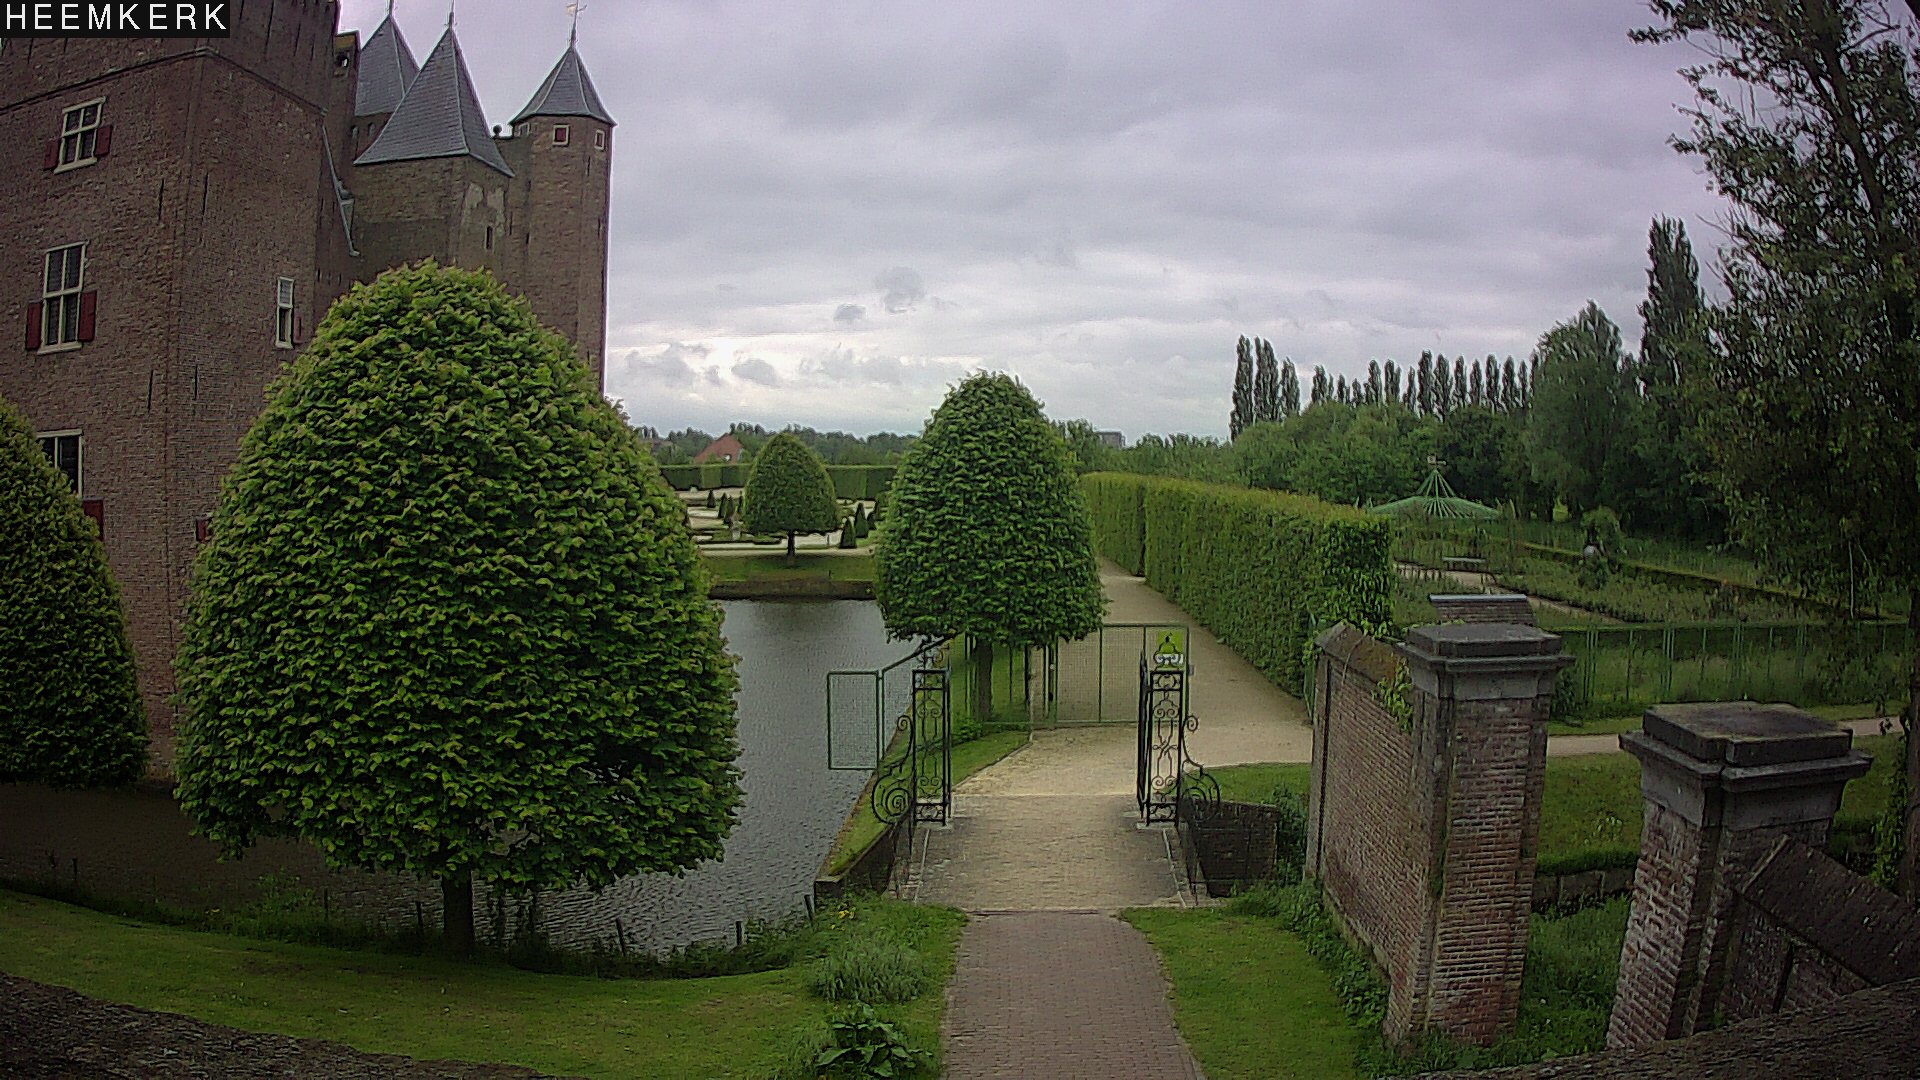 Heemskerk Tor. 08:46